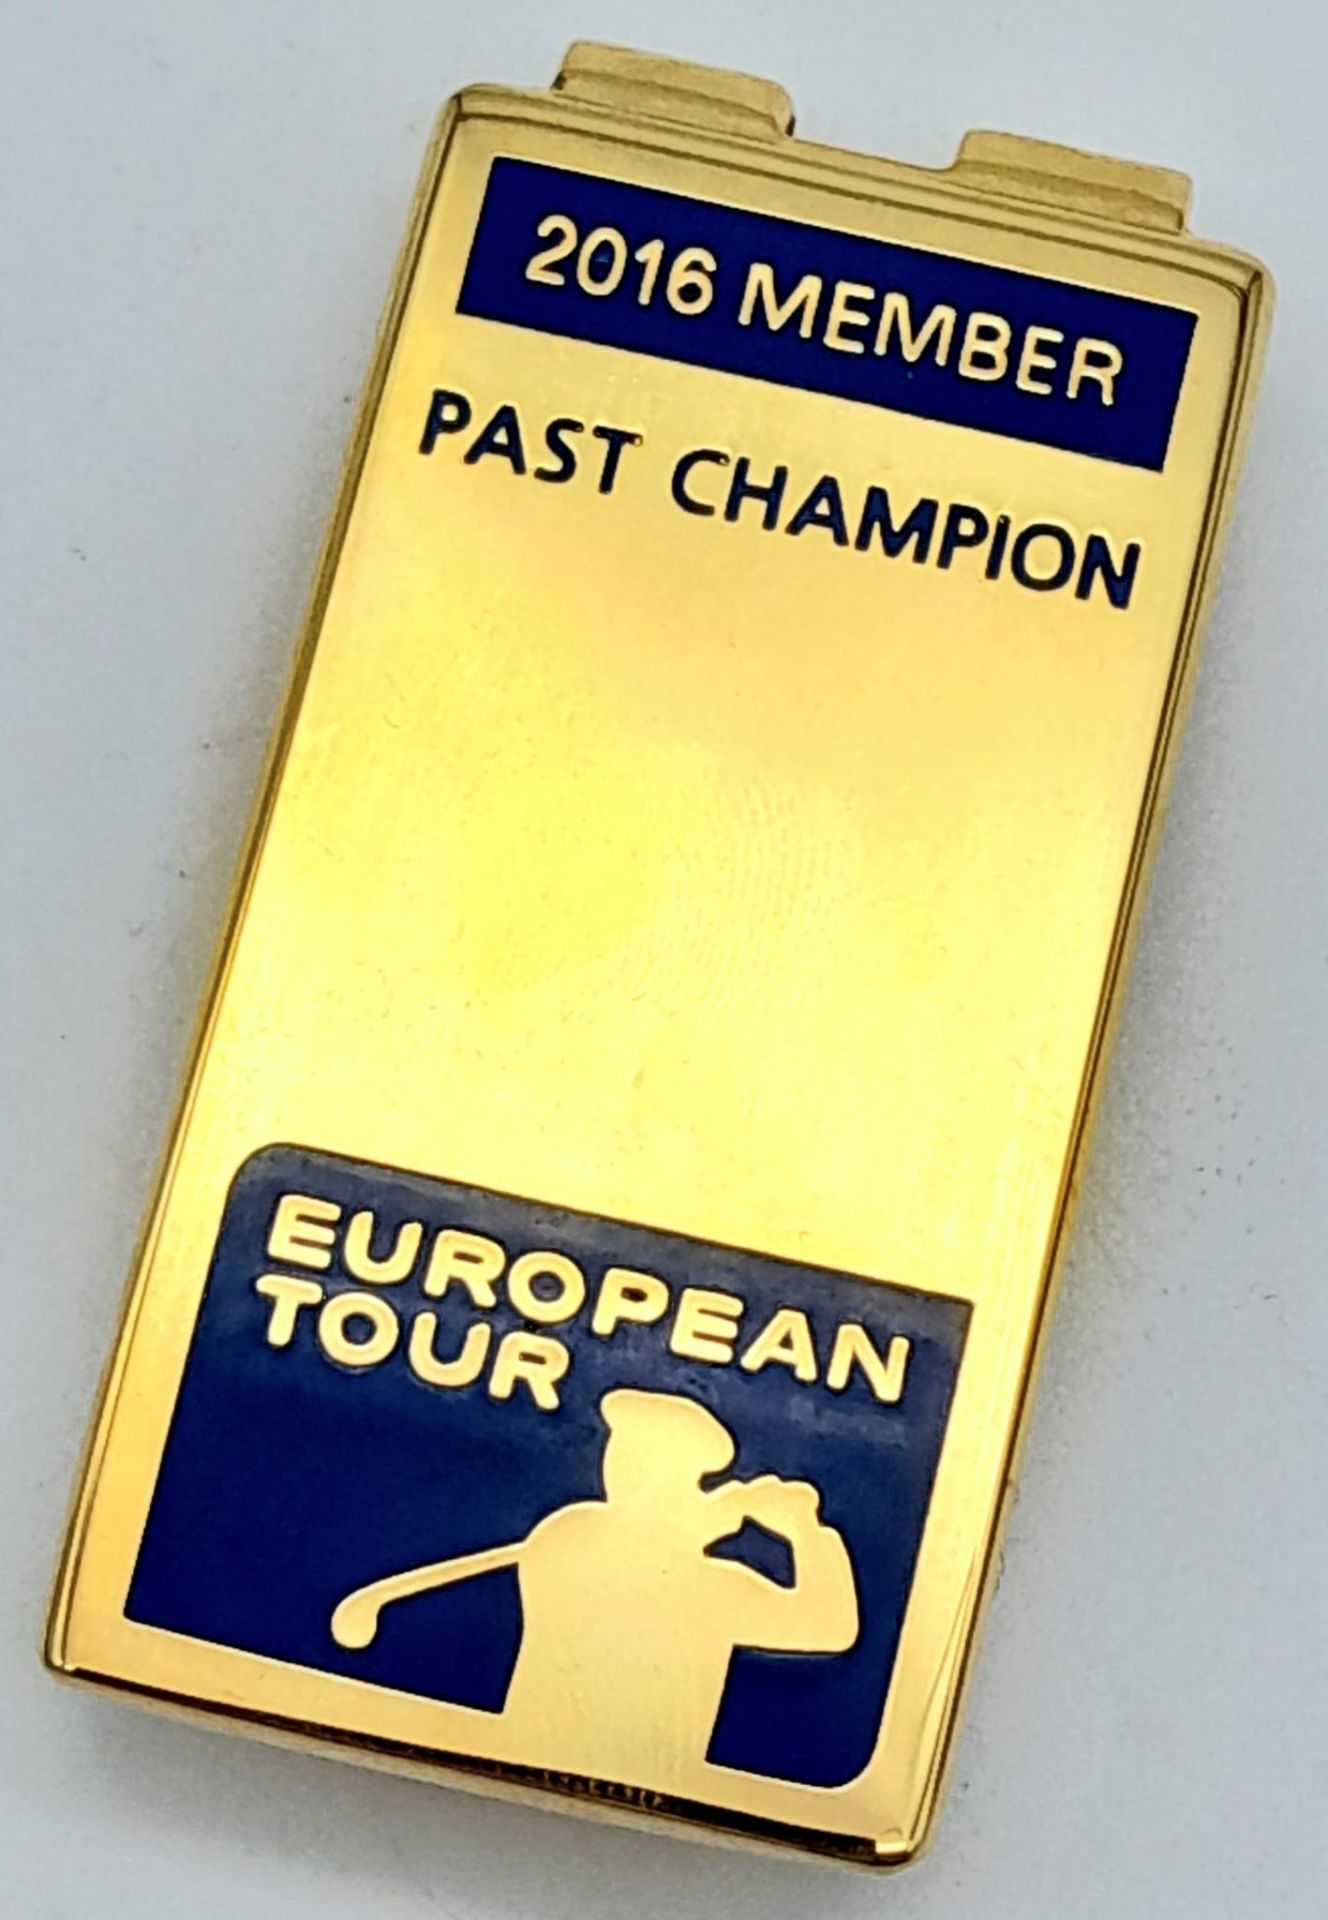 GOLD TONE MONEY CLIP 2016 MEMBER PAST CHAMPION EUROPEAN TOUR GOLF THEMED